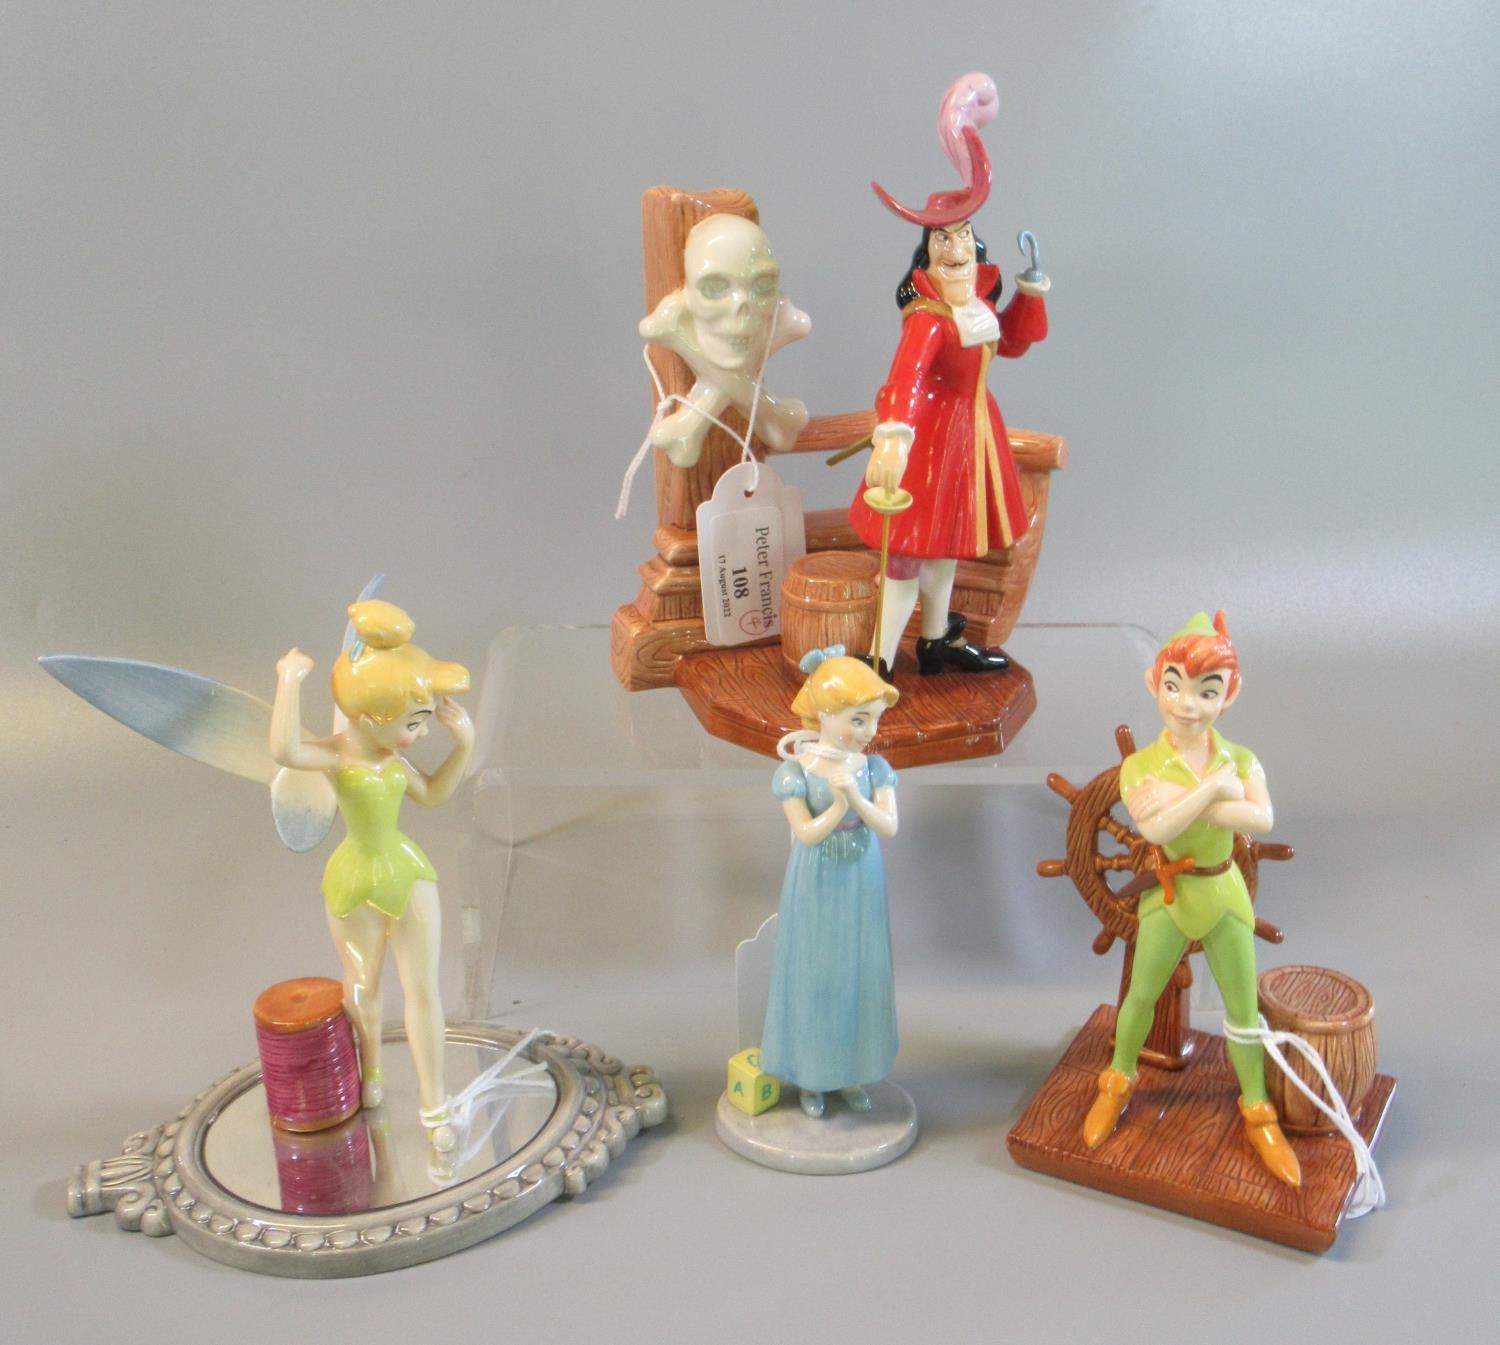 Captain Hook figure (Royal Doulton) from our Royal Doulton collection, Disney collectibles and memorabilia